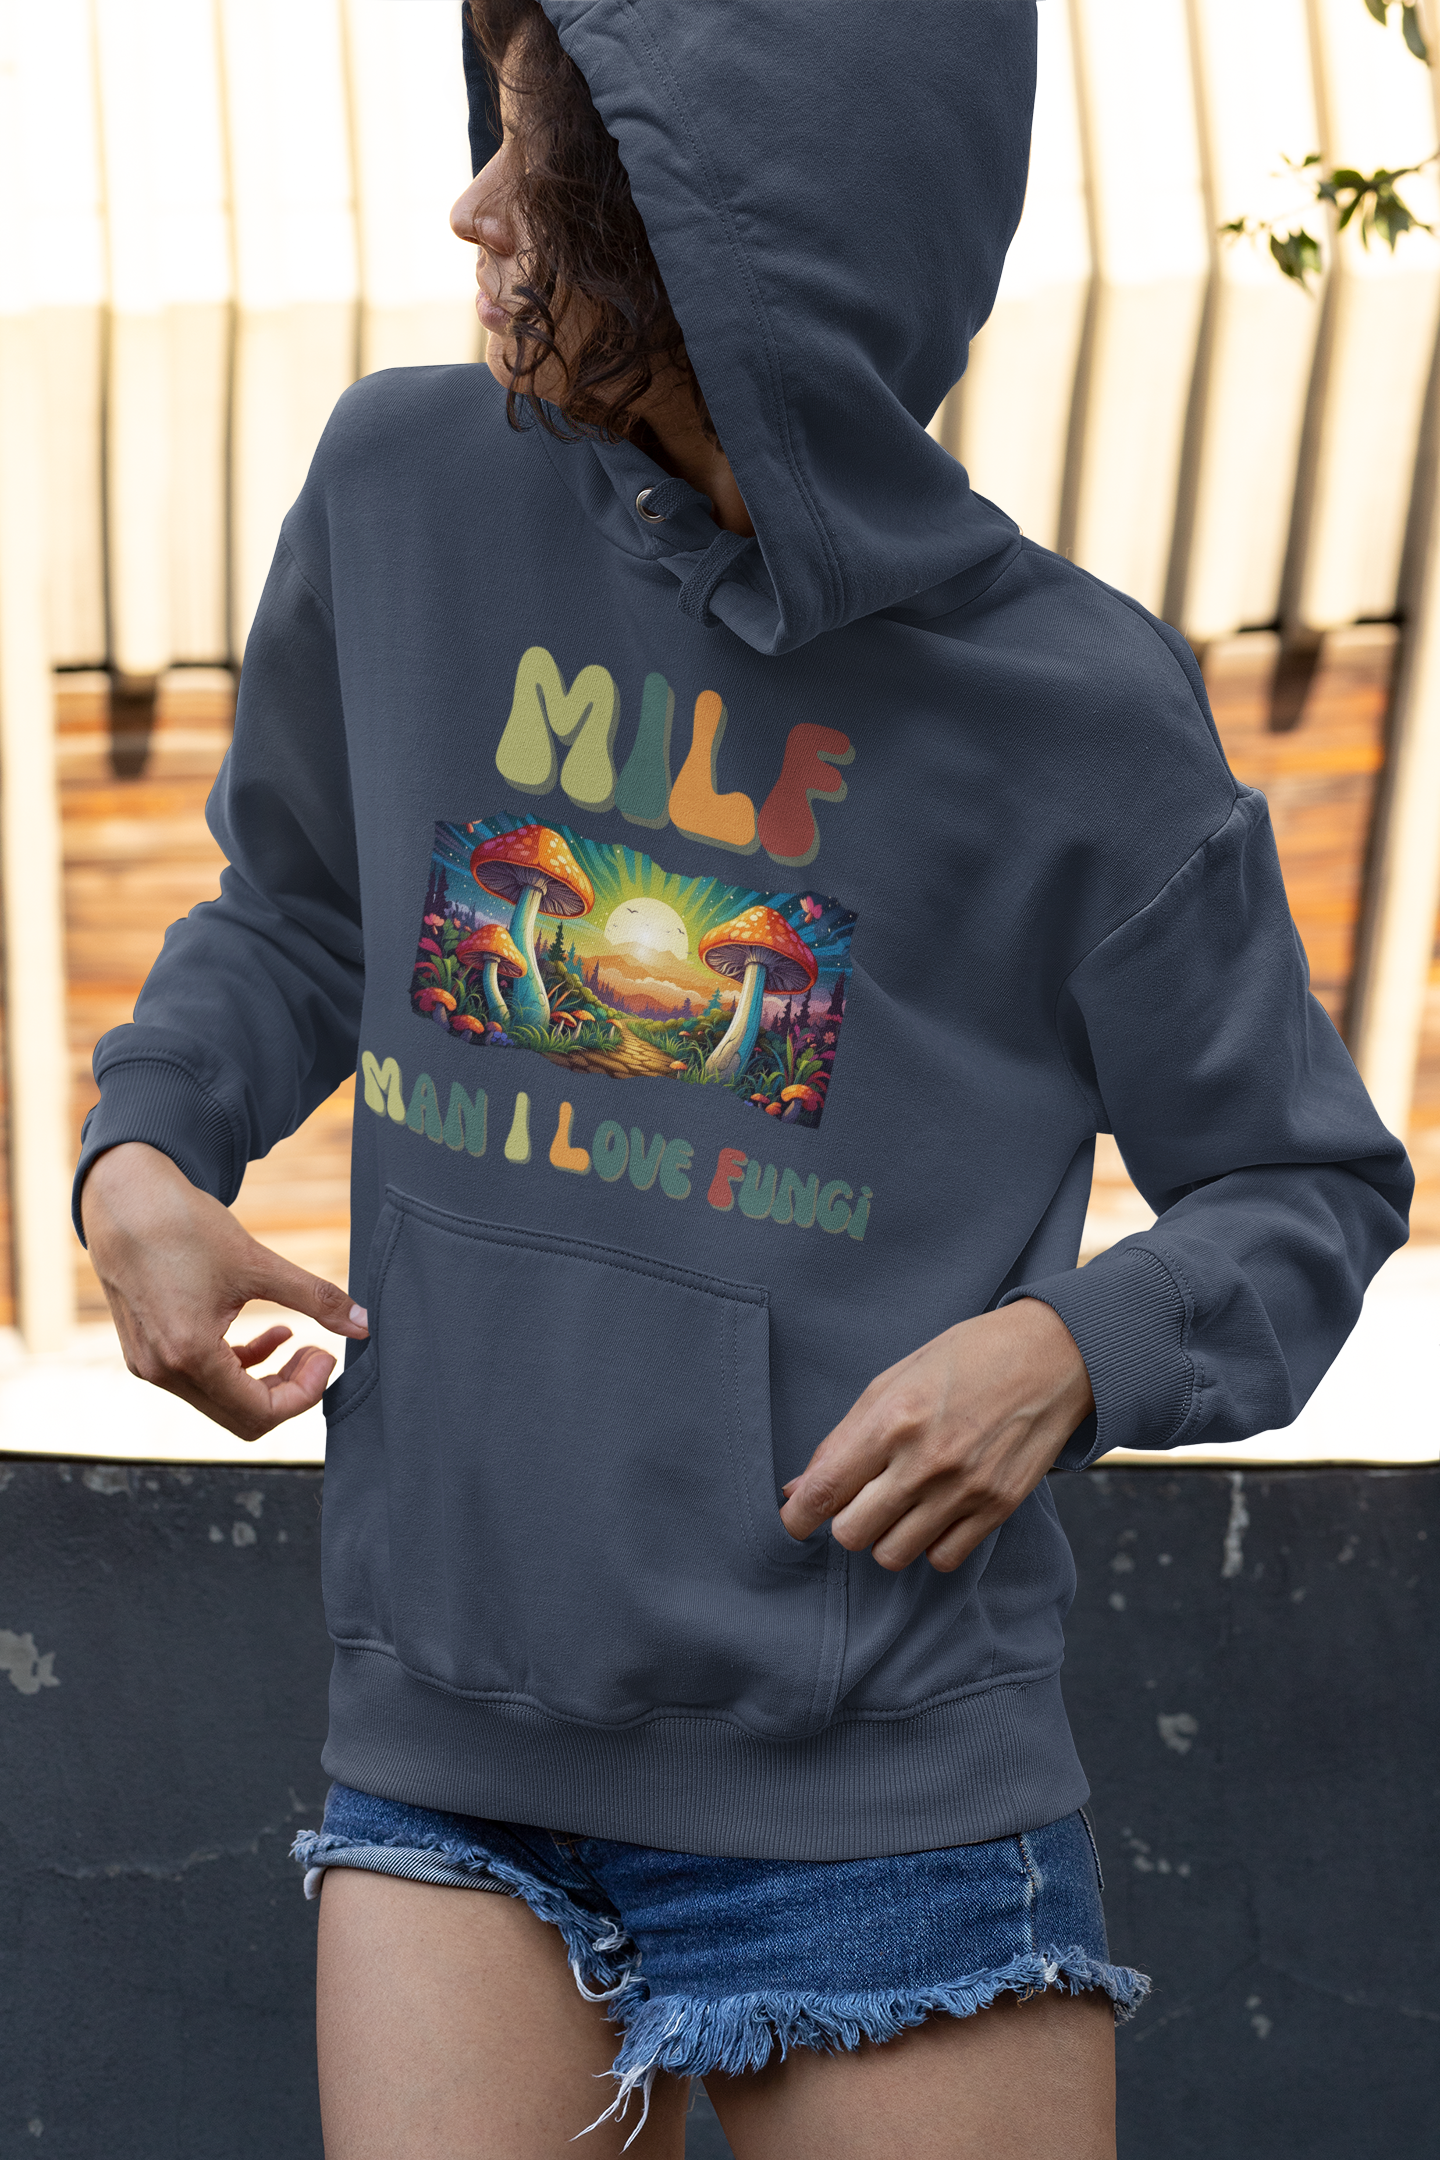 MILF Man I Love Fungi Hooded Sweatshirt